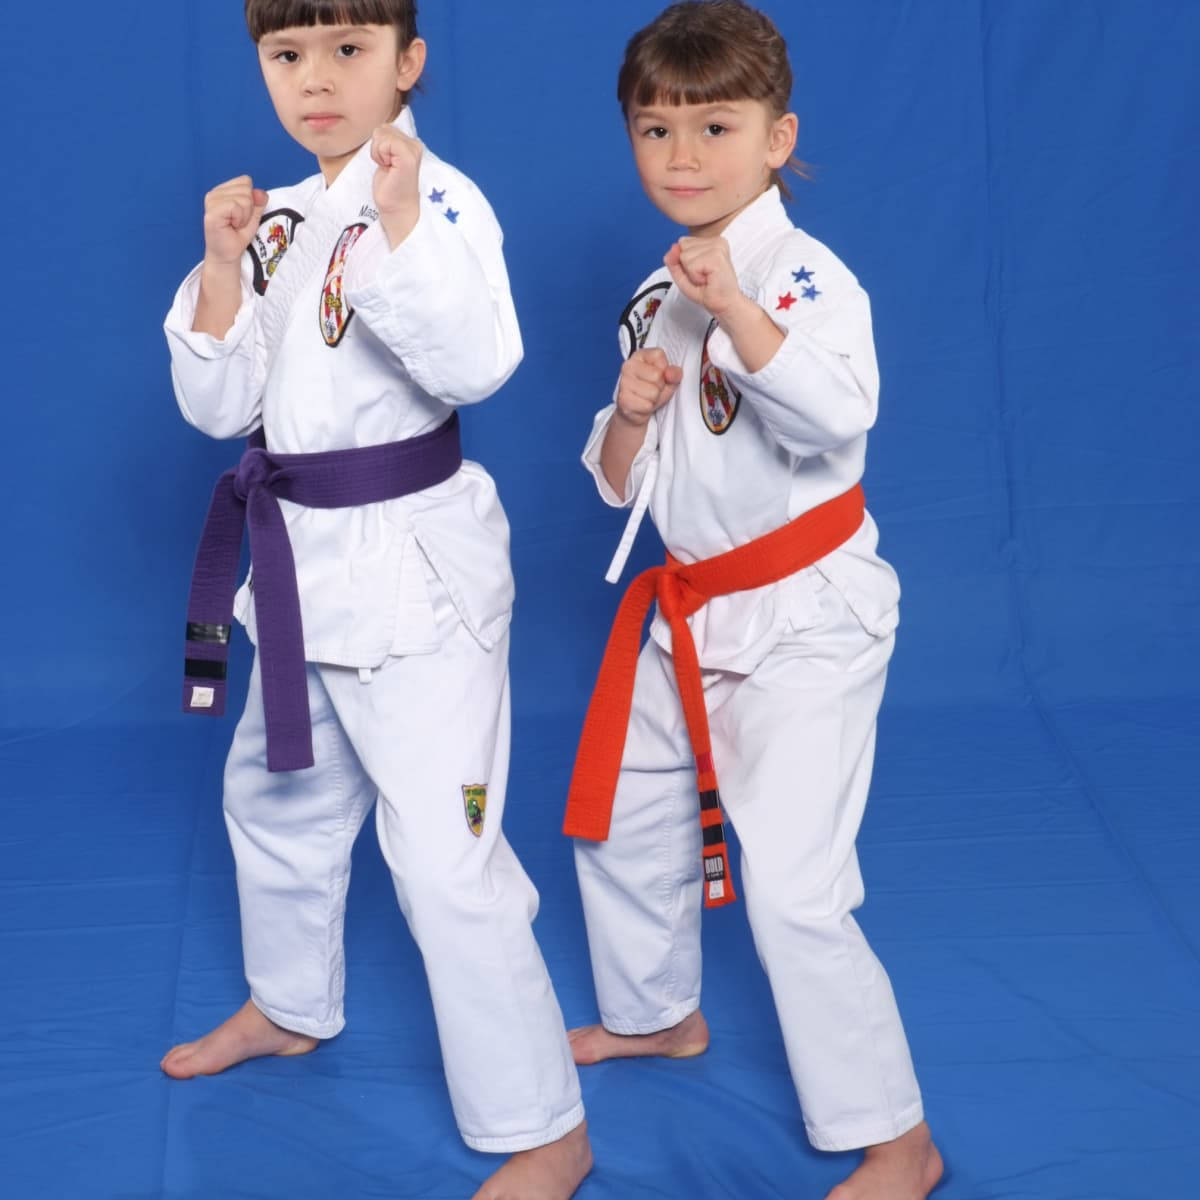 Karatezwei Kinder Posieren. Wallpaper